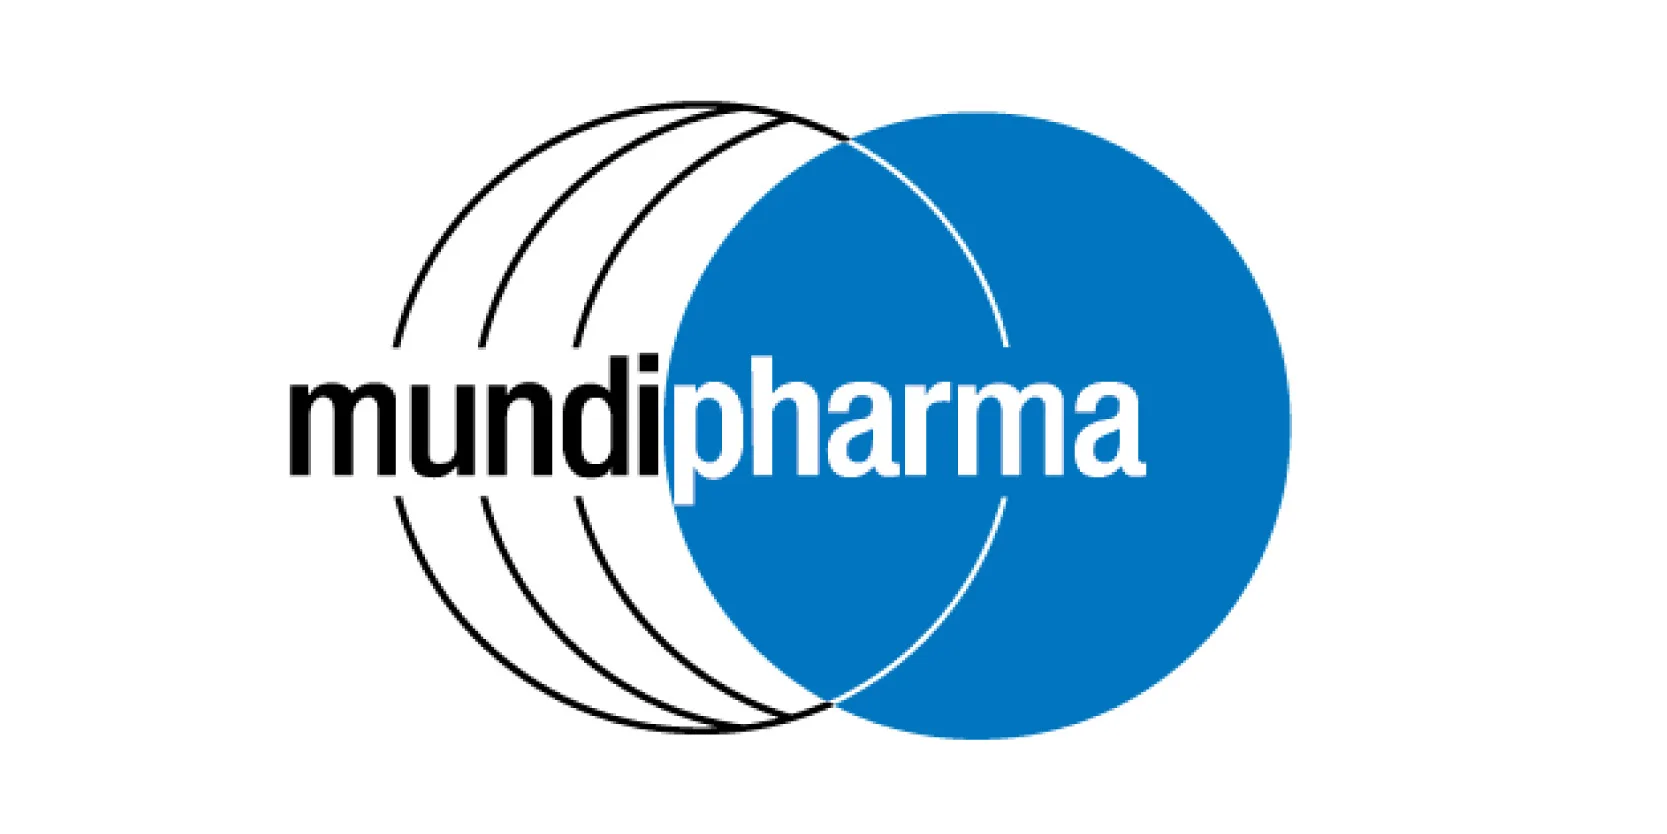 mundi pharma logo has three line circle and one blue circle